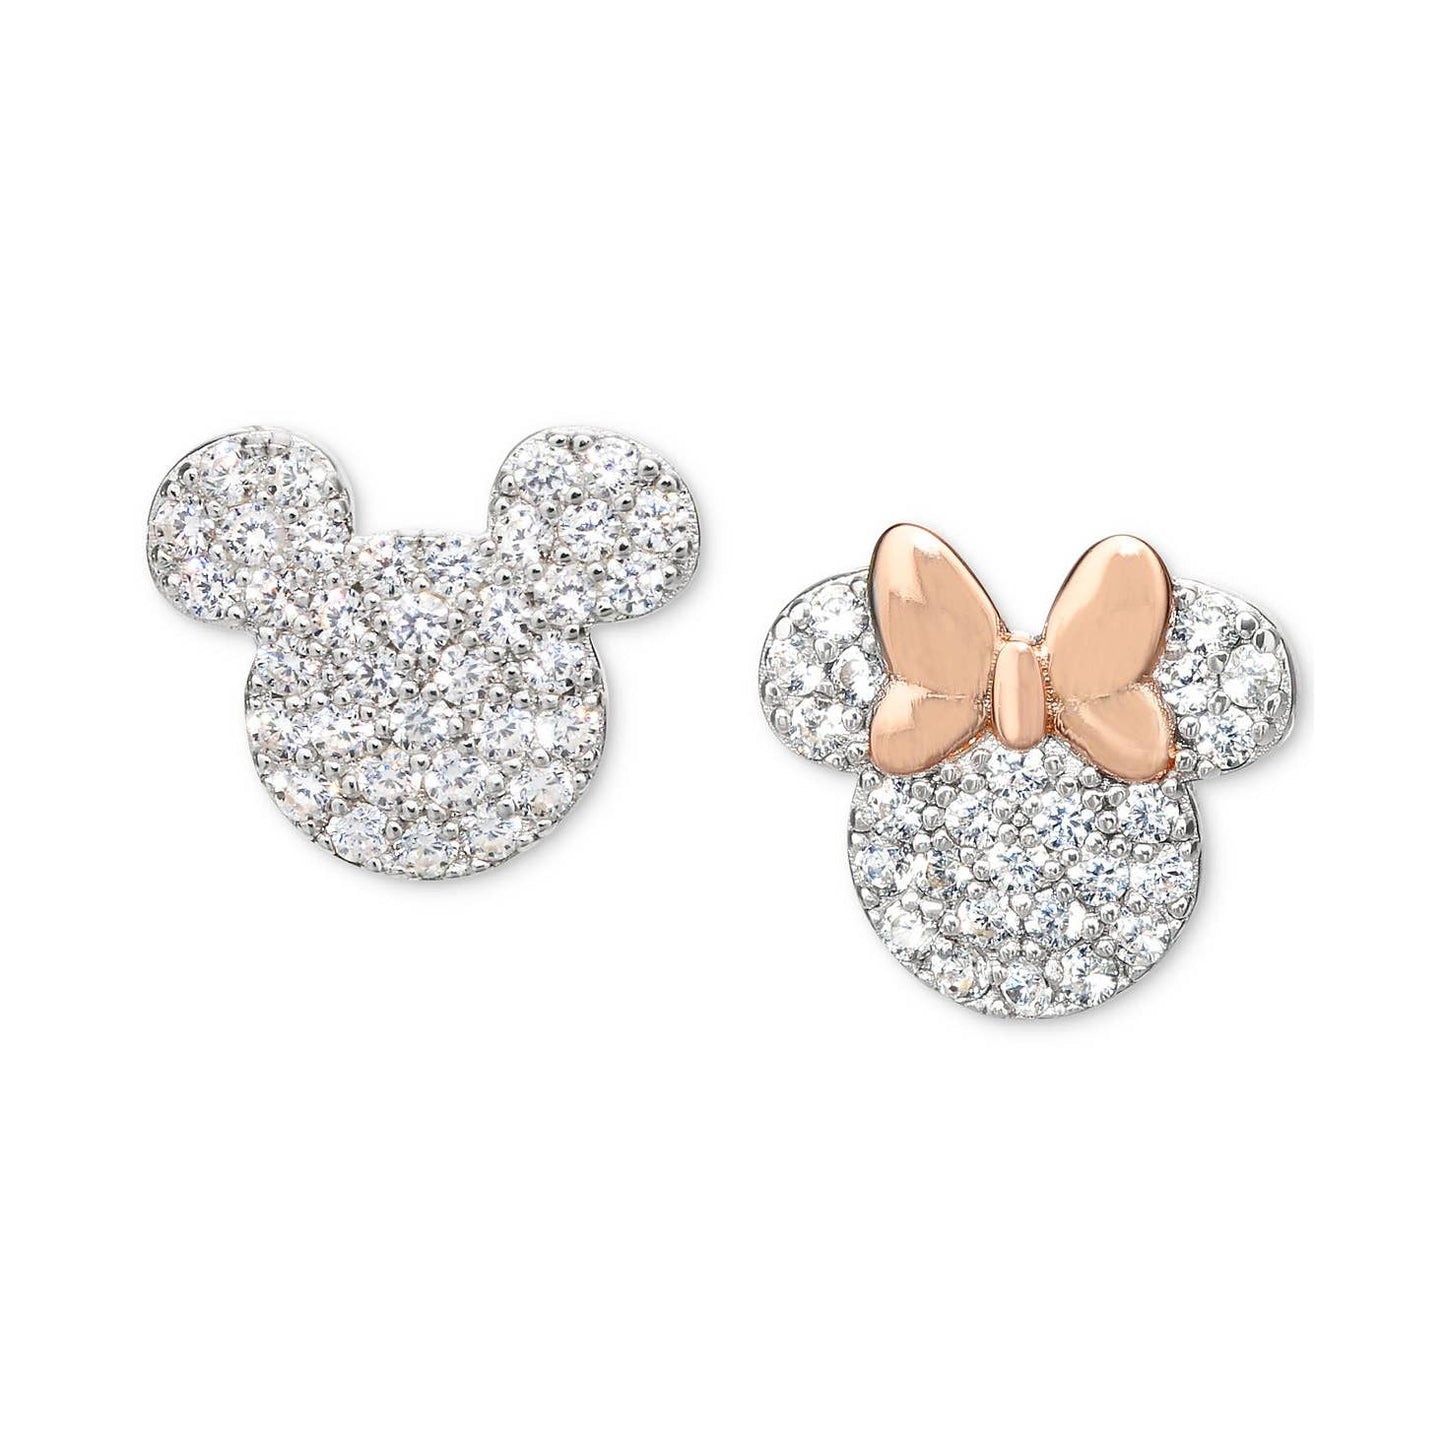 DISNEY Mickey Minnie Mismatch Stud Earrings in Sterling Silver & 18k Rose Gold-Plate